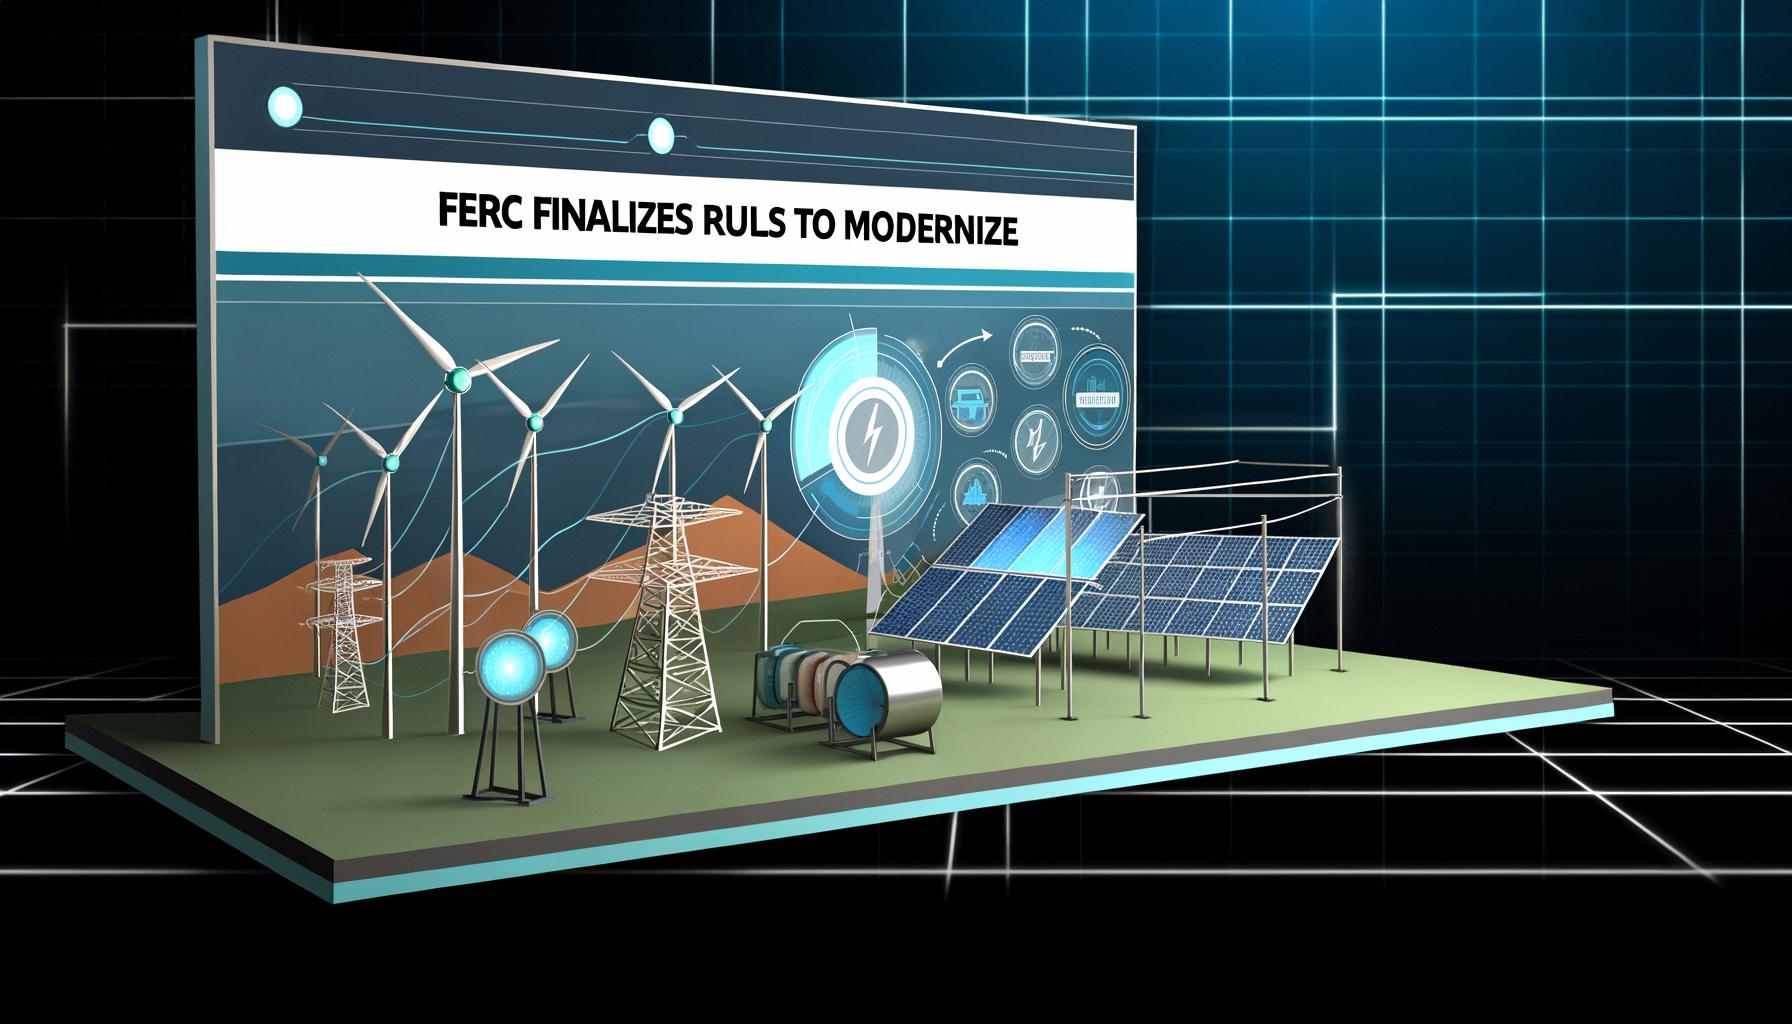 FERC unveils new grid regulations to support renewable energy integration.